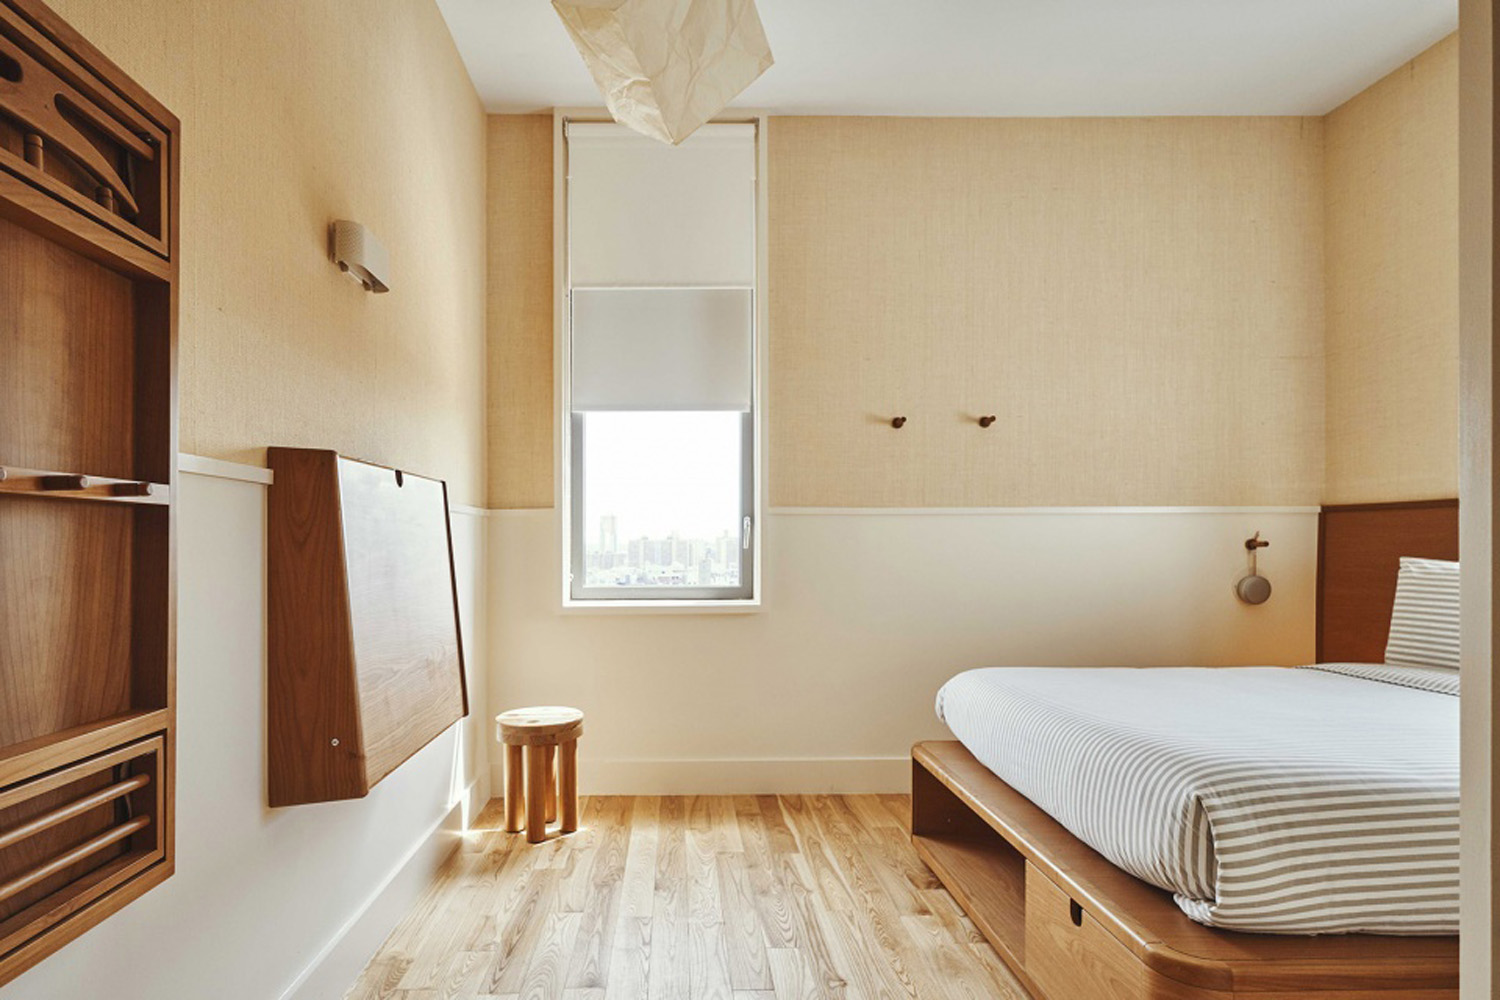 Renovation design of resort hotel rooms